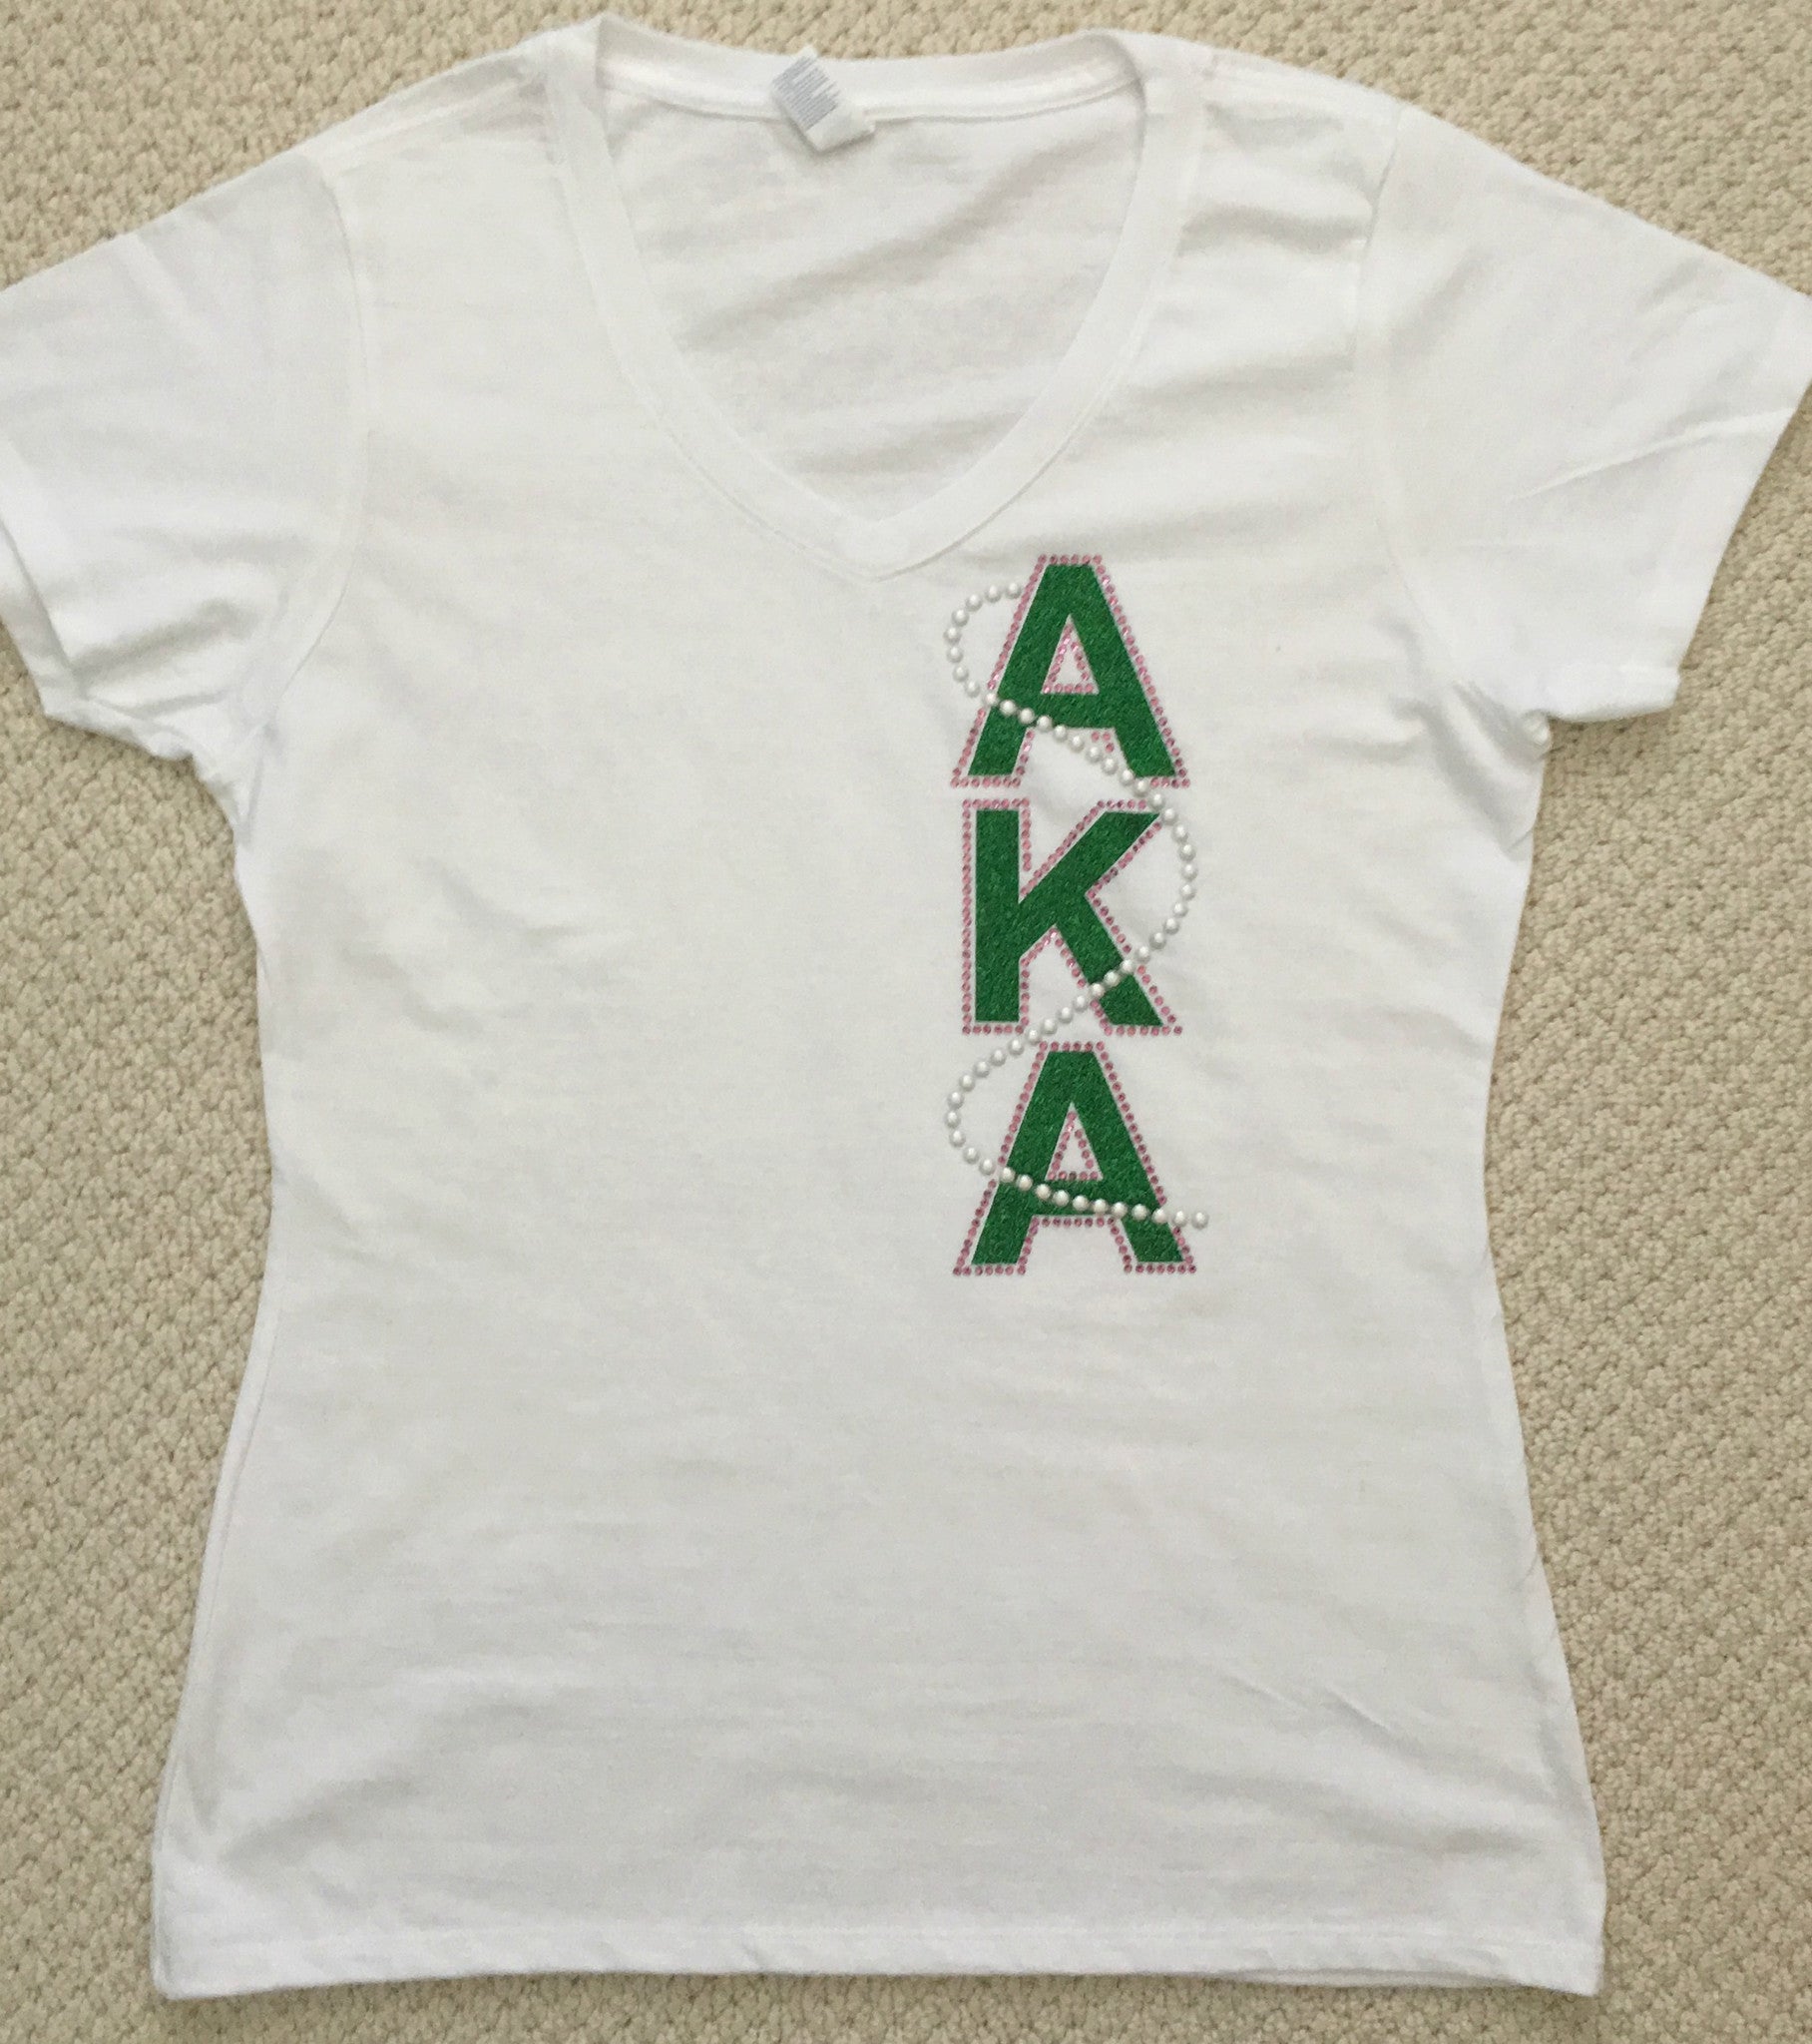 AKA White Monogram T-shirt